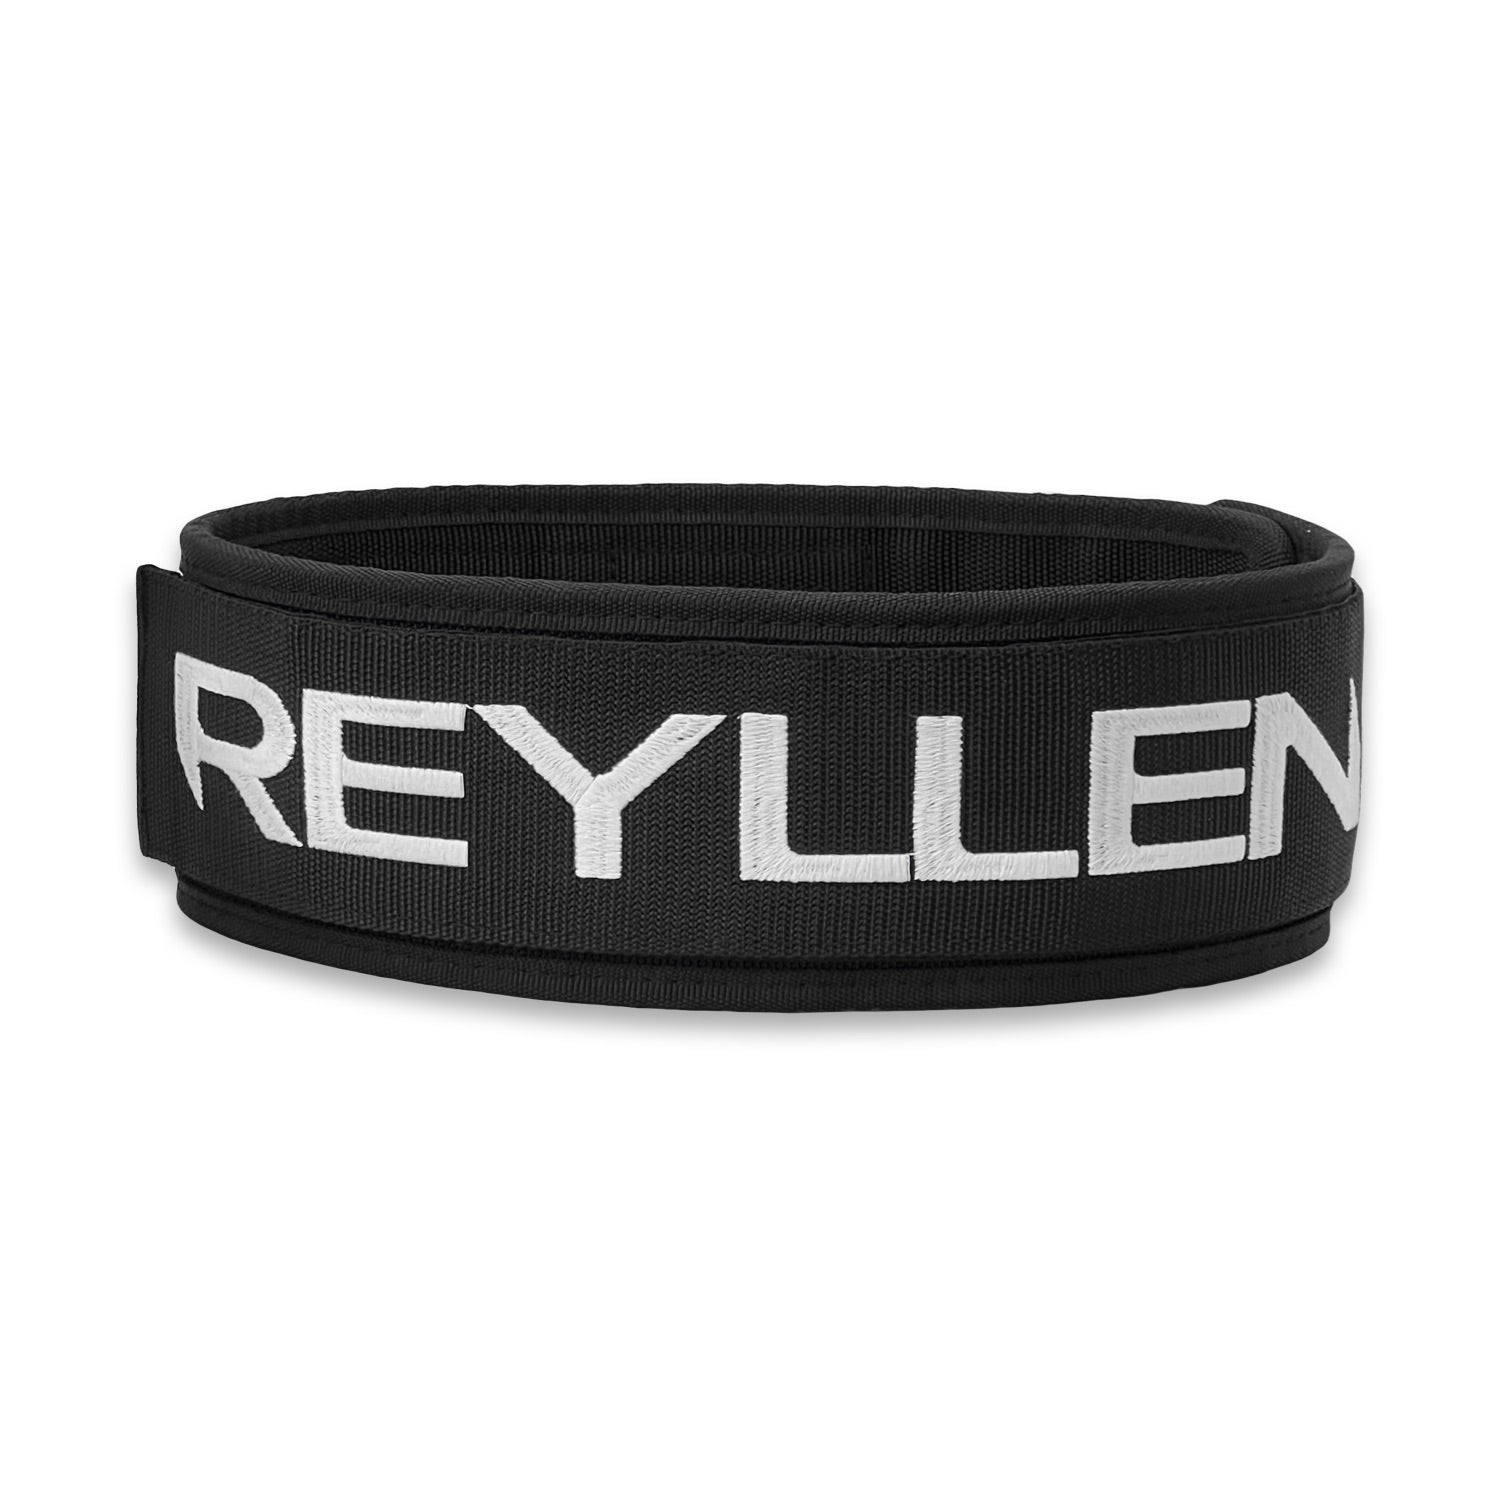 Reyllen GX Nylon 4" Weigh Lifting Belt Black - logo on velcro strap view 